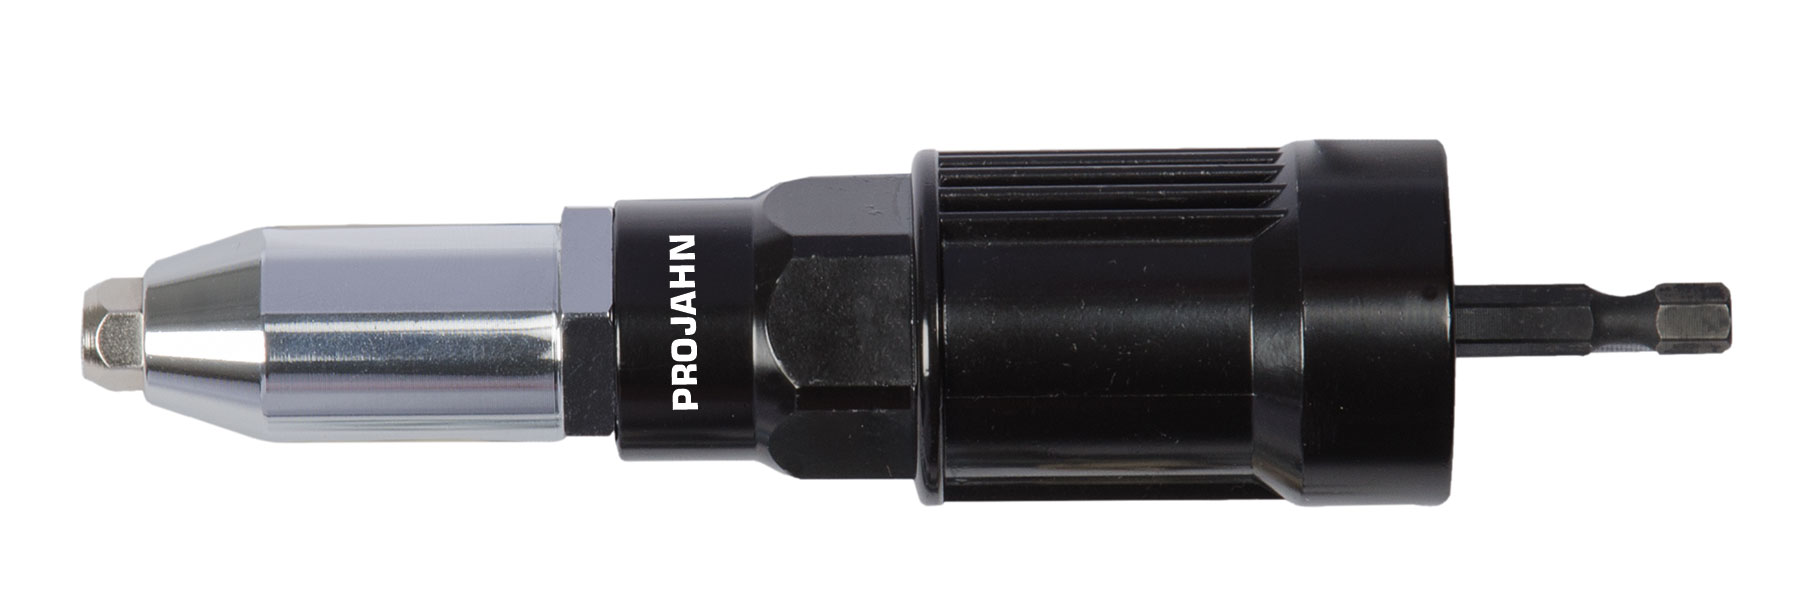 PROFI Blind riveting adapter XYXYX21132 For blind rivets processing of 2,4 / 3,0 - 3,2 / 4,0 / 4.8 - 5,0 mm diameter